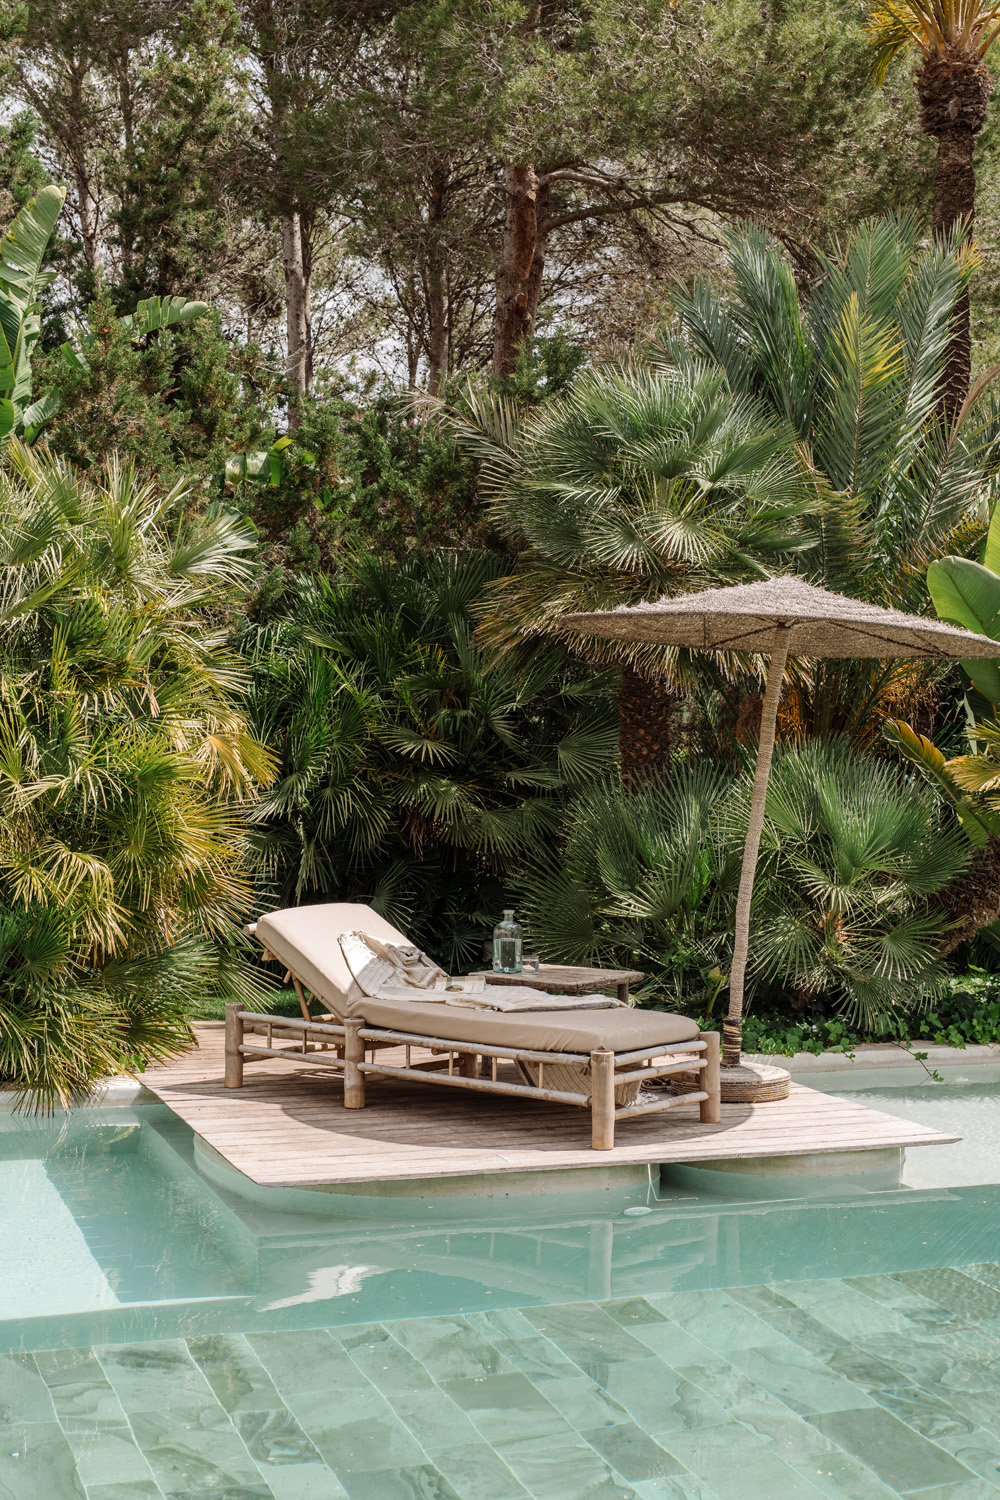 Deckchair by Jungle Studios - modern landscape design practice in Ibiza